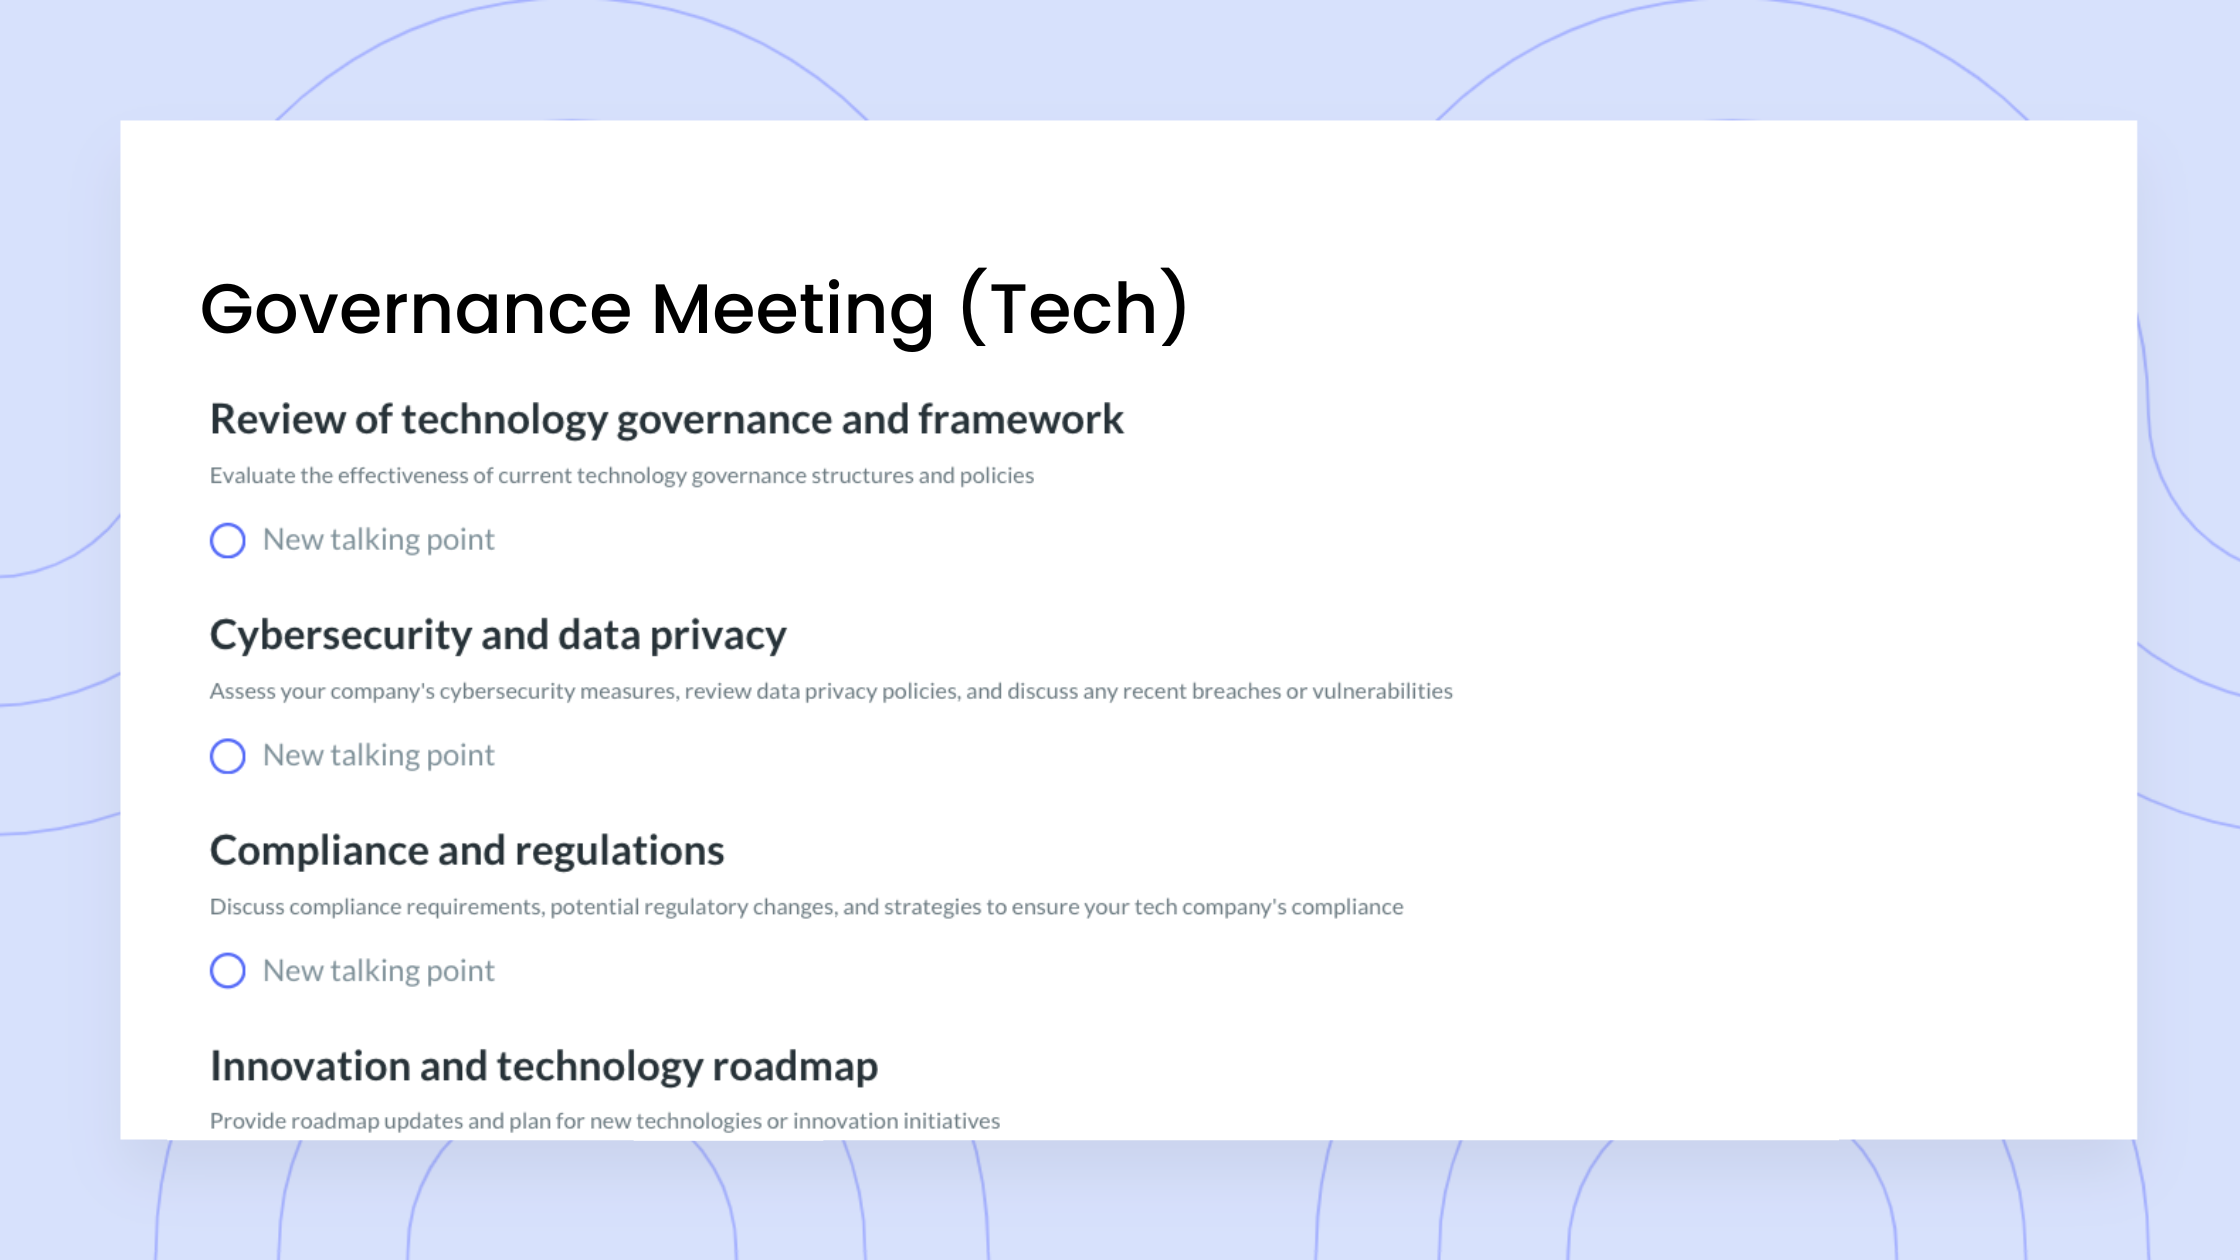 Governance Meeting Agenda (Tech)